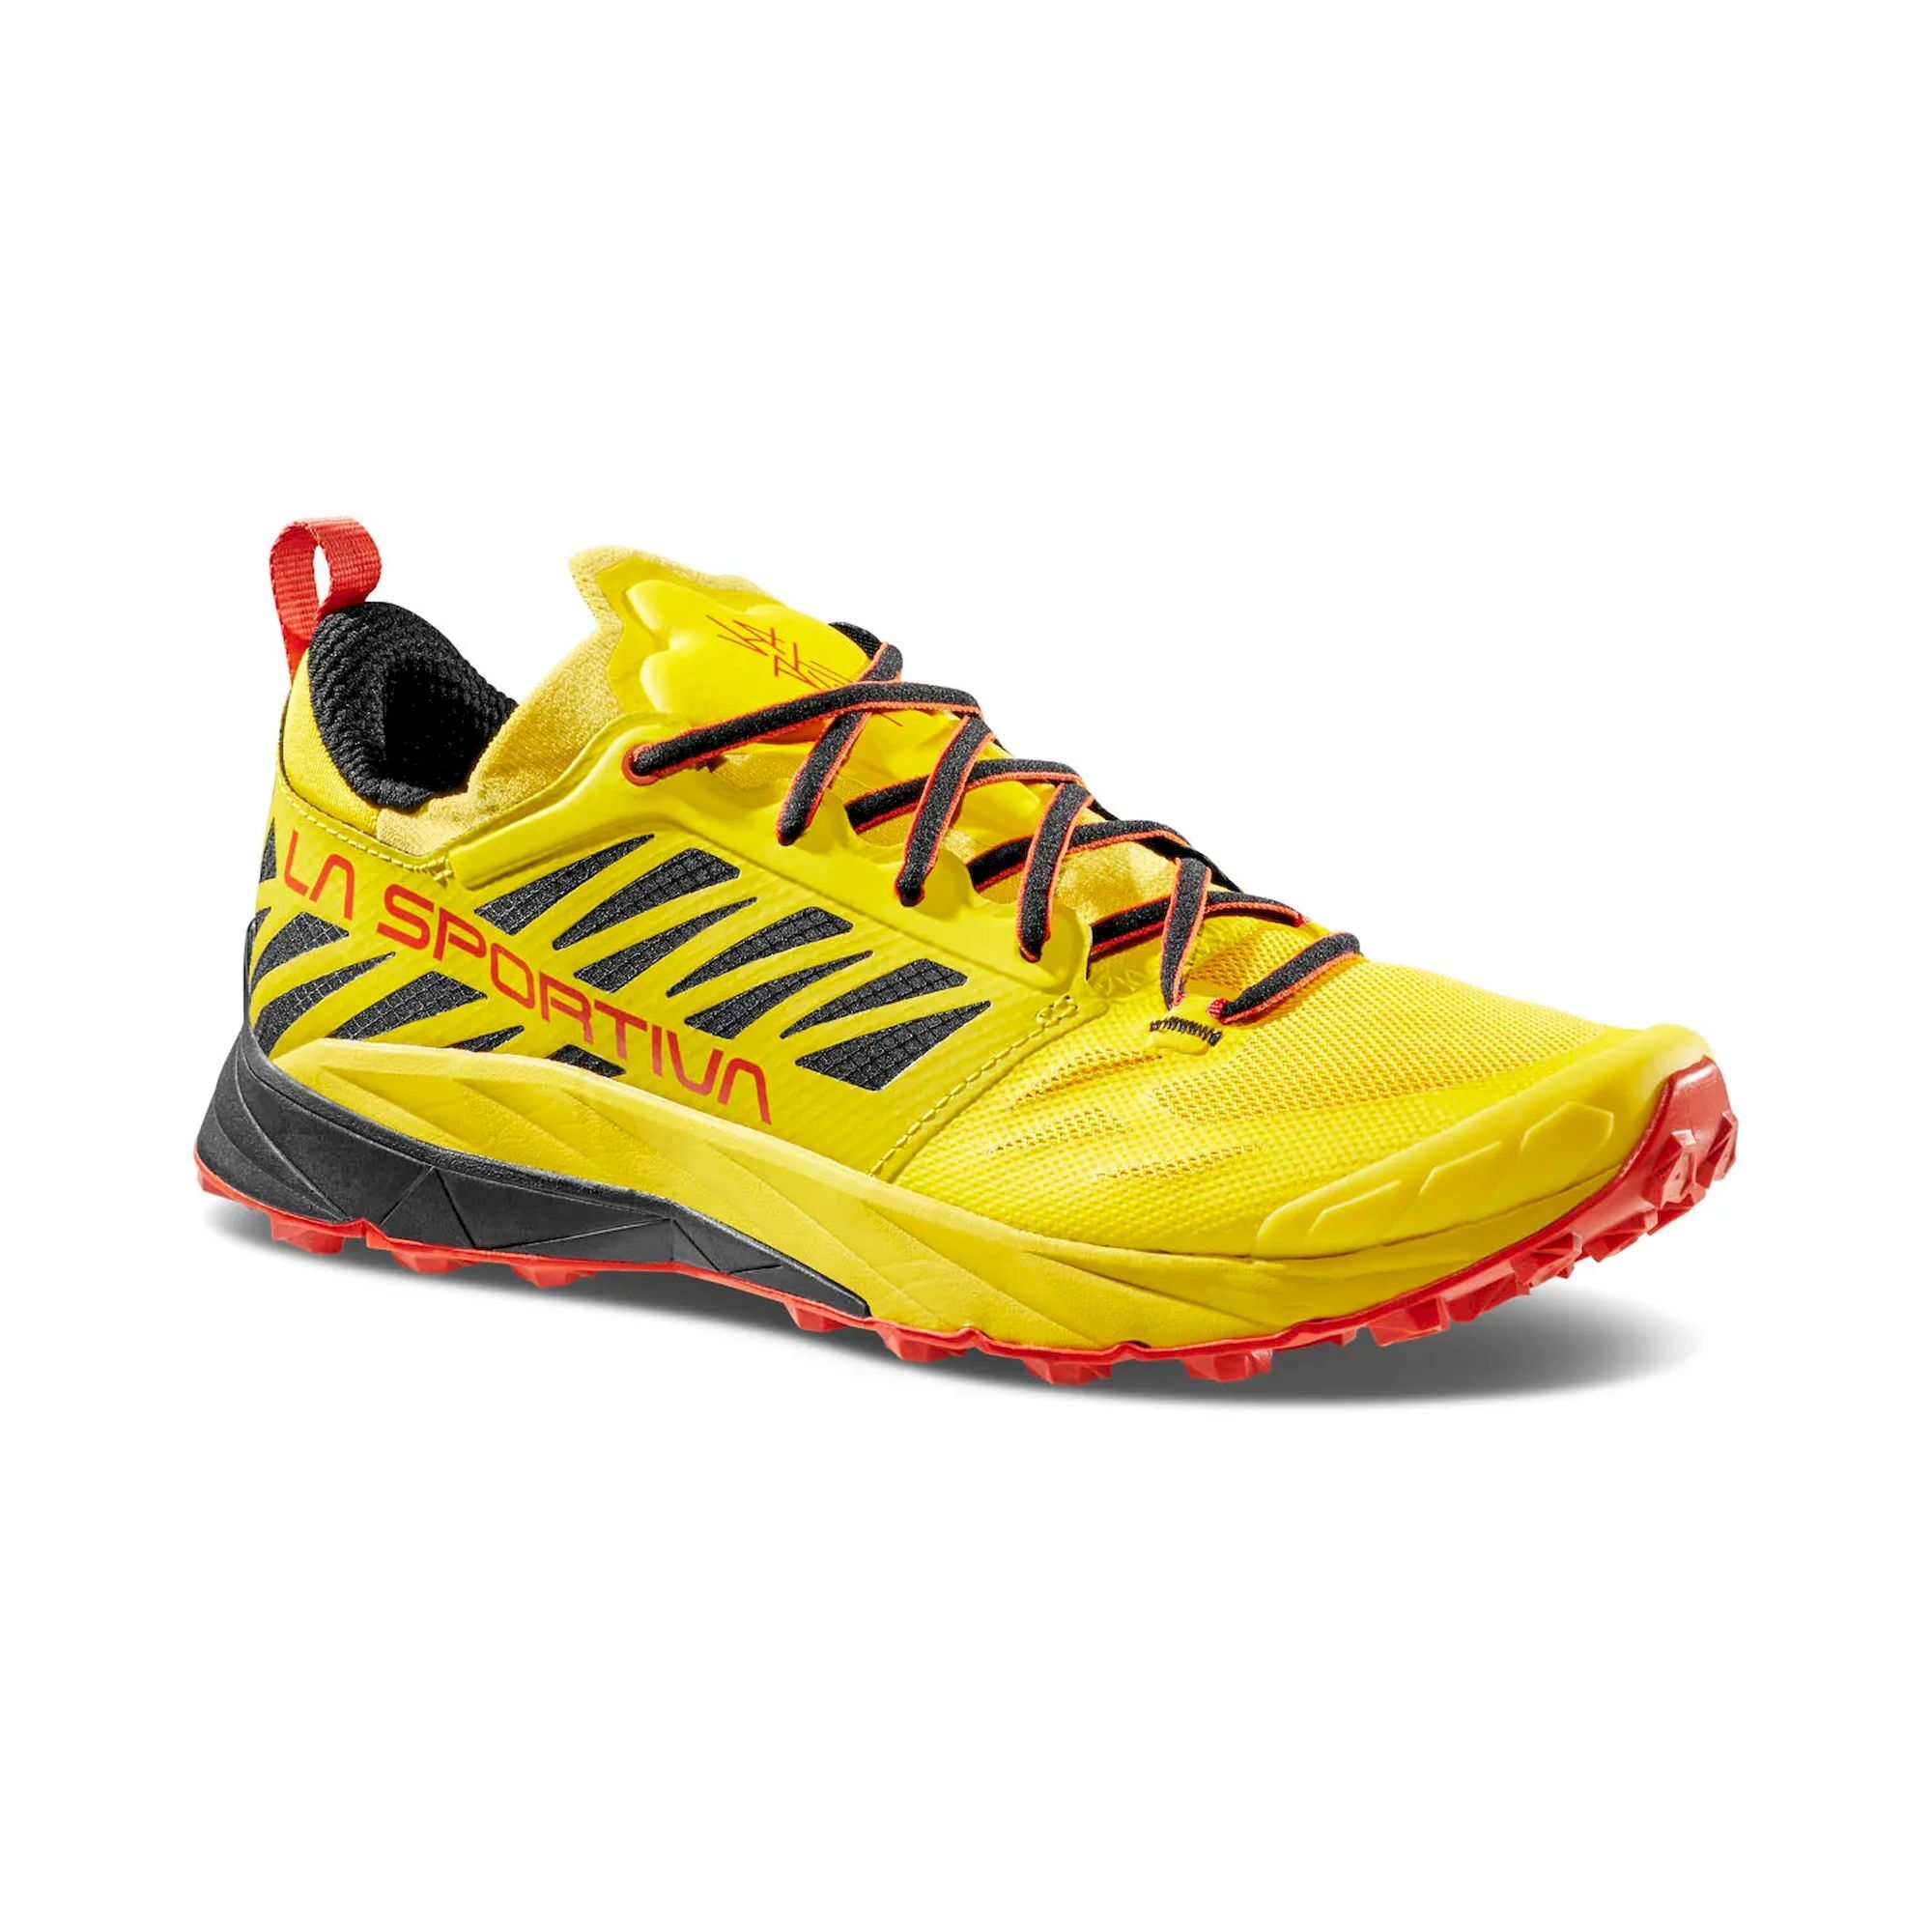 La Sportiva Kaptiva - Trail Running shoes - Men's